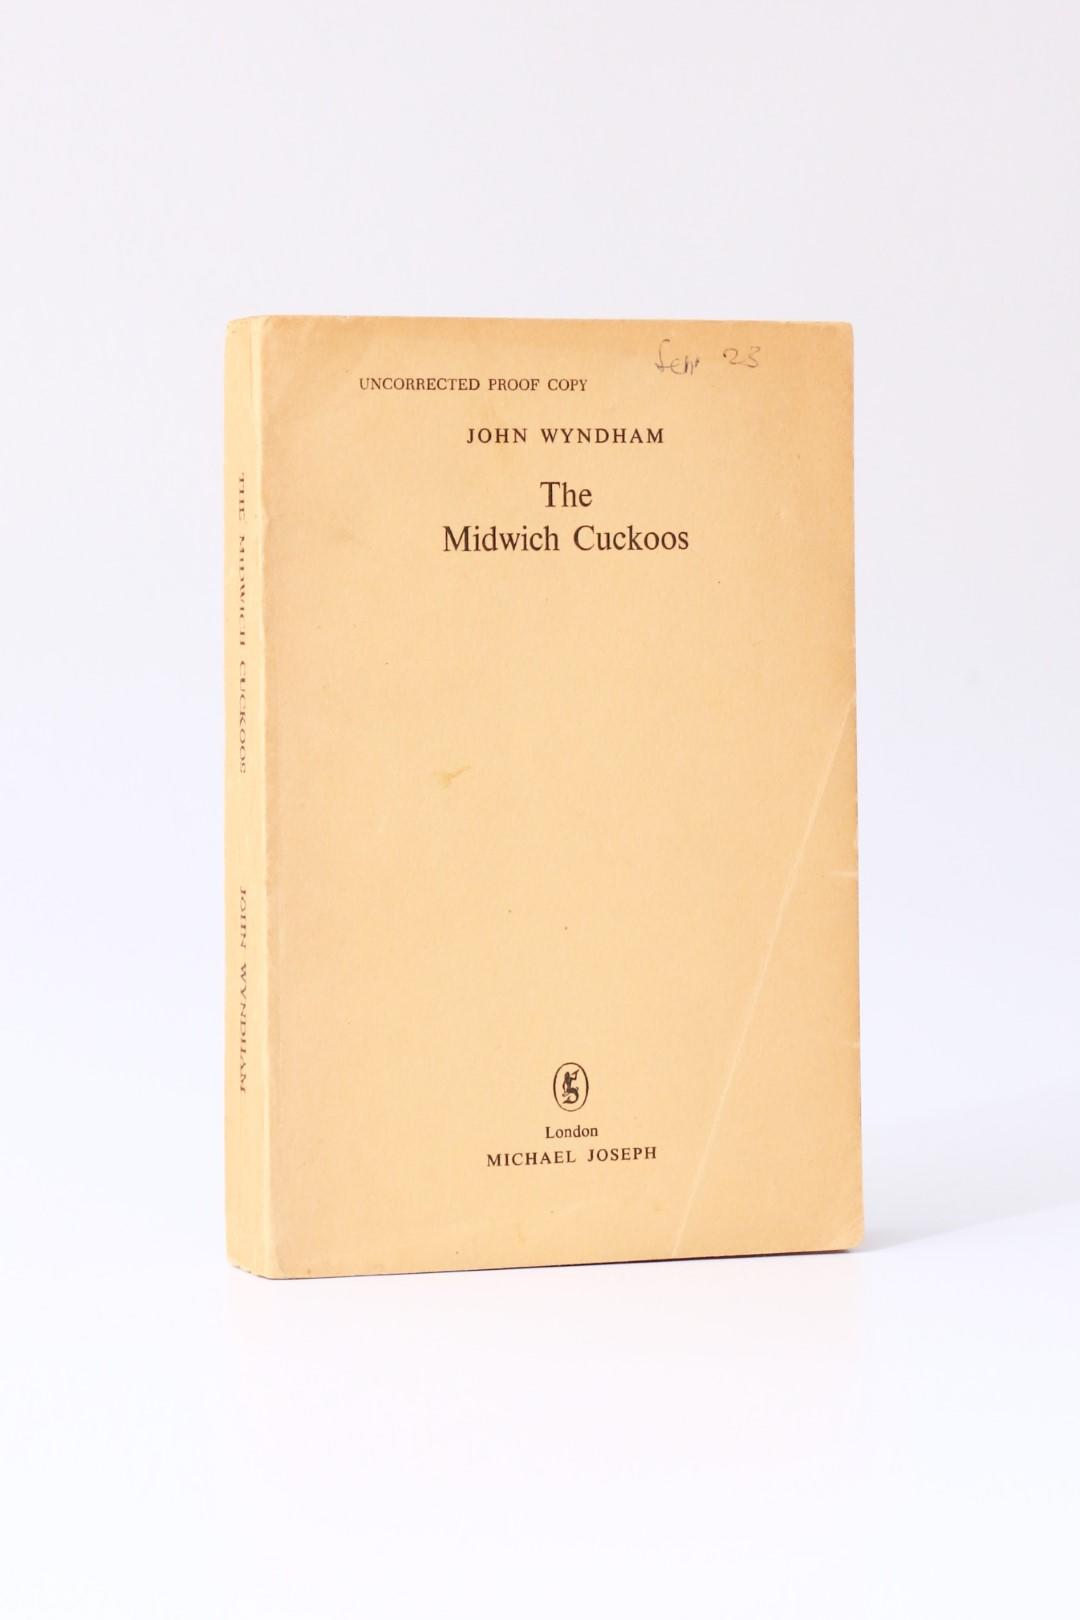 John Wyndham - The Midwich Cuckoos - Michael Joseph, 1957, Proof.